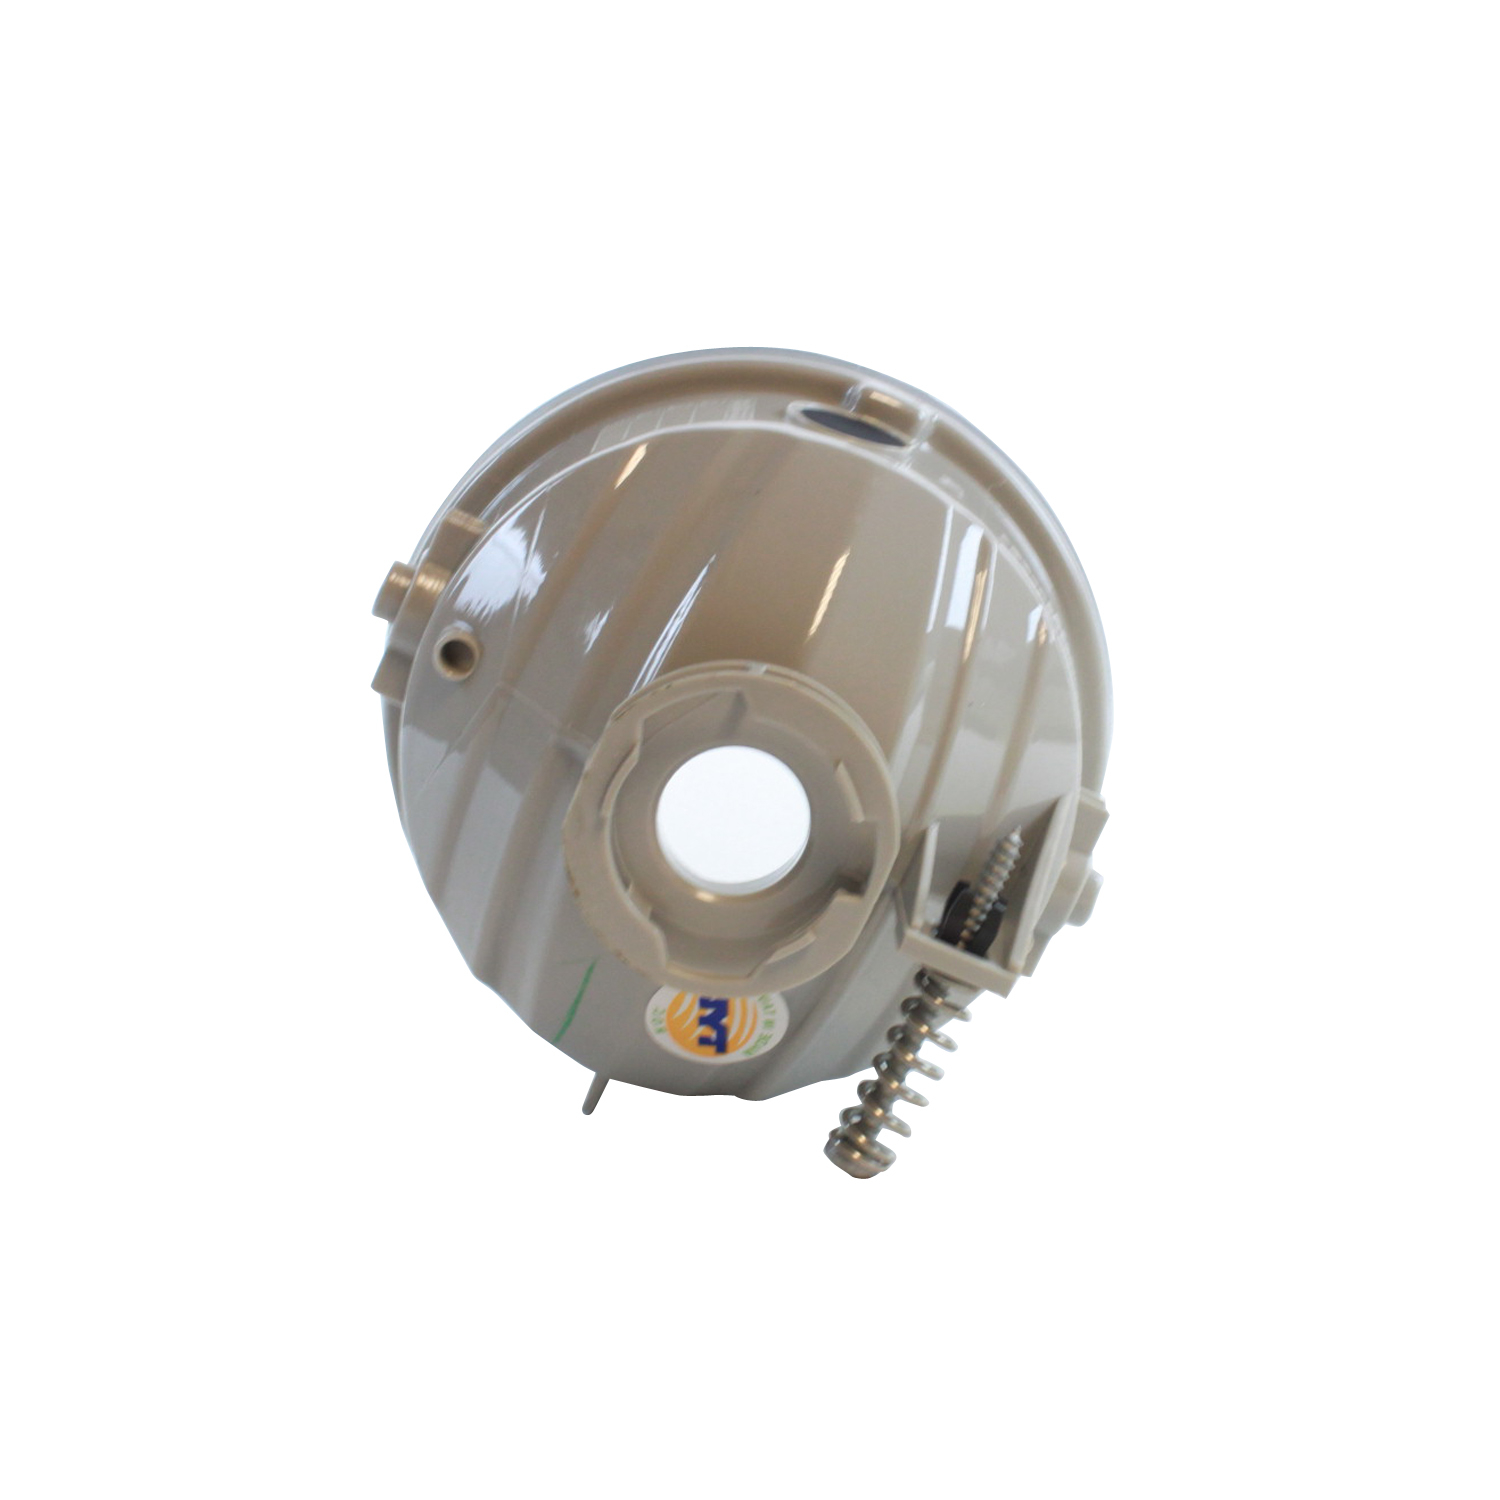 TYC - CAPA Certified Fog Light Assembly - TYC 19-5904-01-9